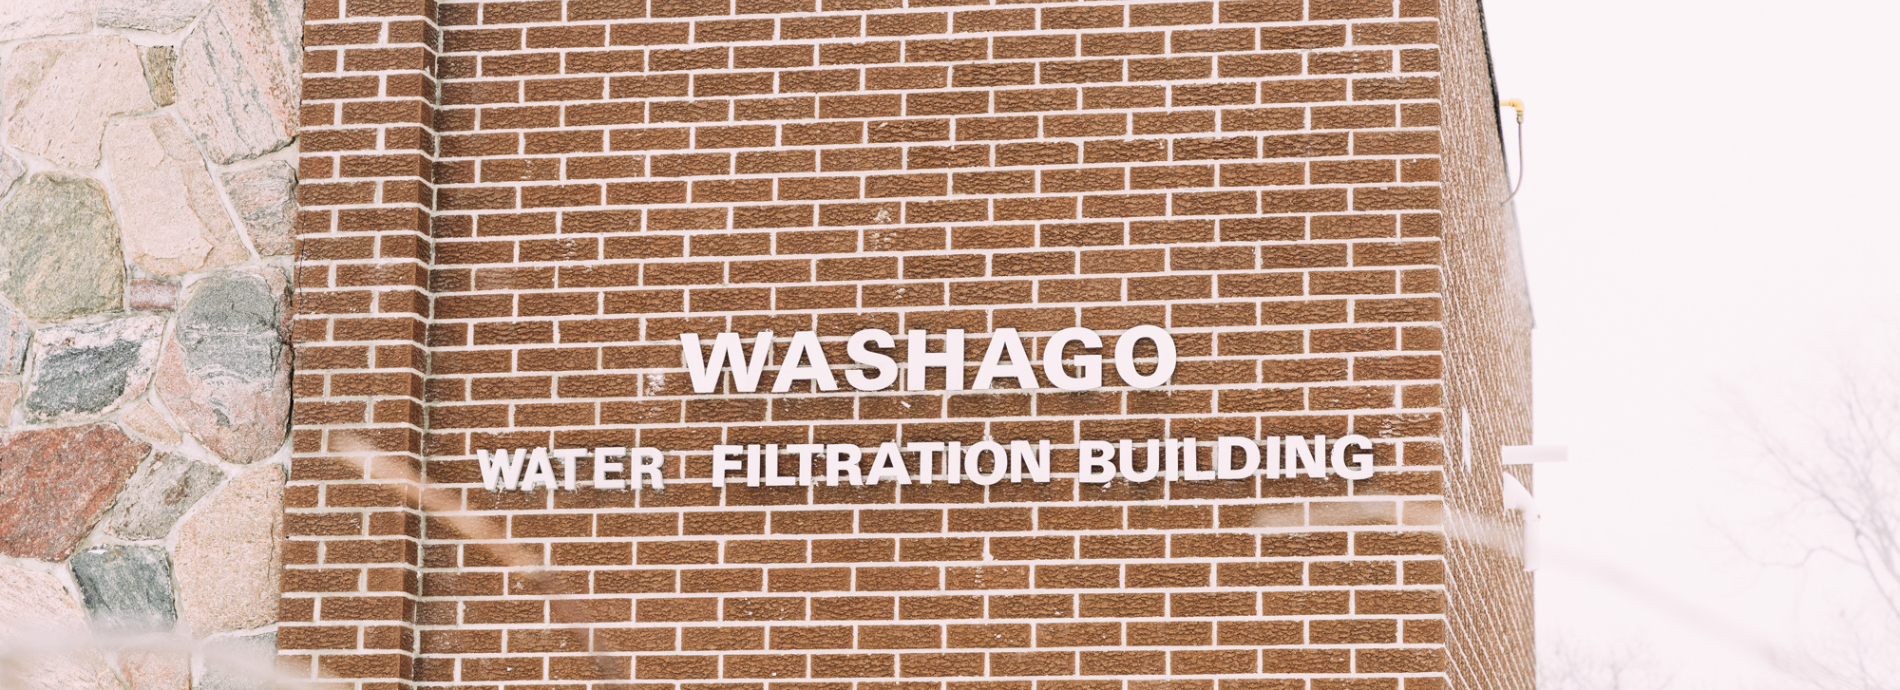 Washago water filtration building